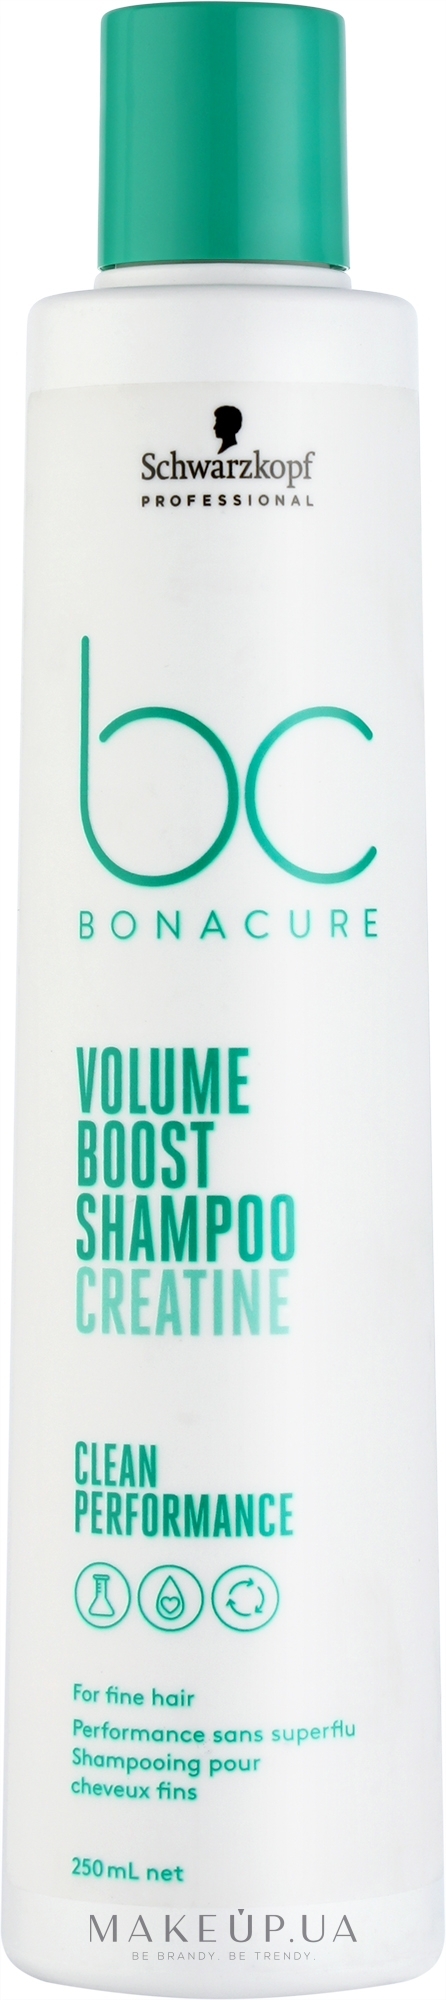 Шампунь для тонкого волосся - Schwarzkopf Professional Bonacure Volume Boost Shampoo Ceratine — фото 250ml